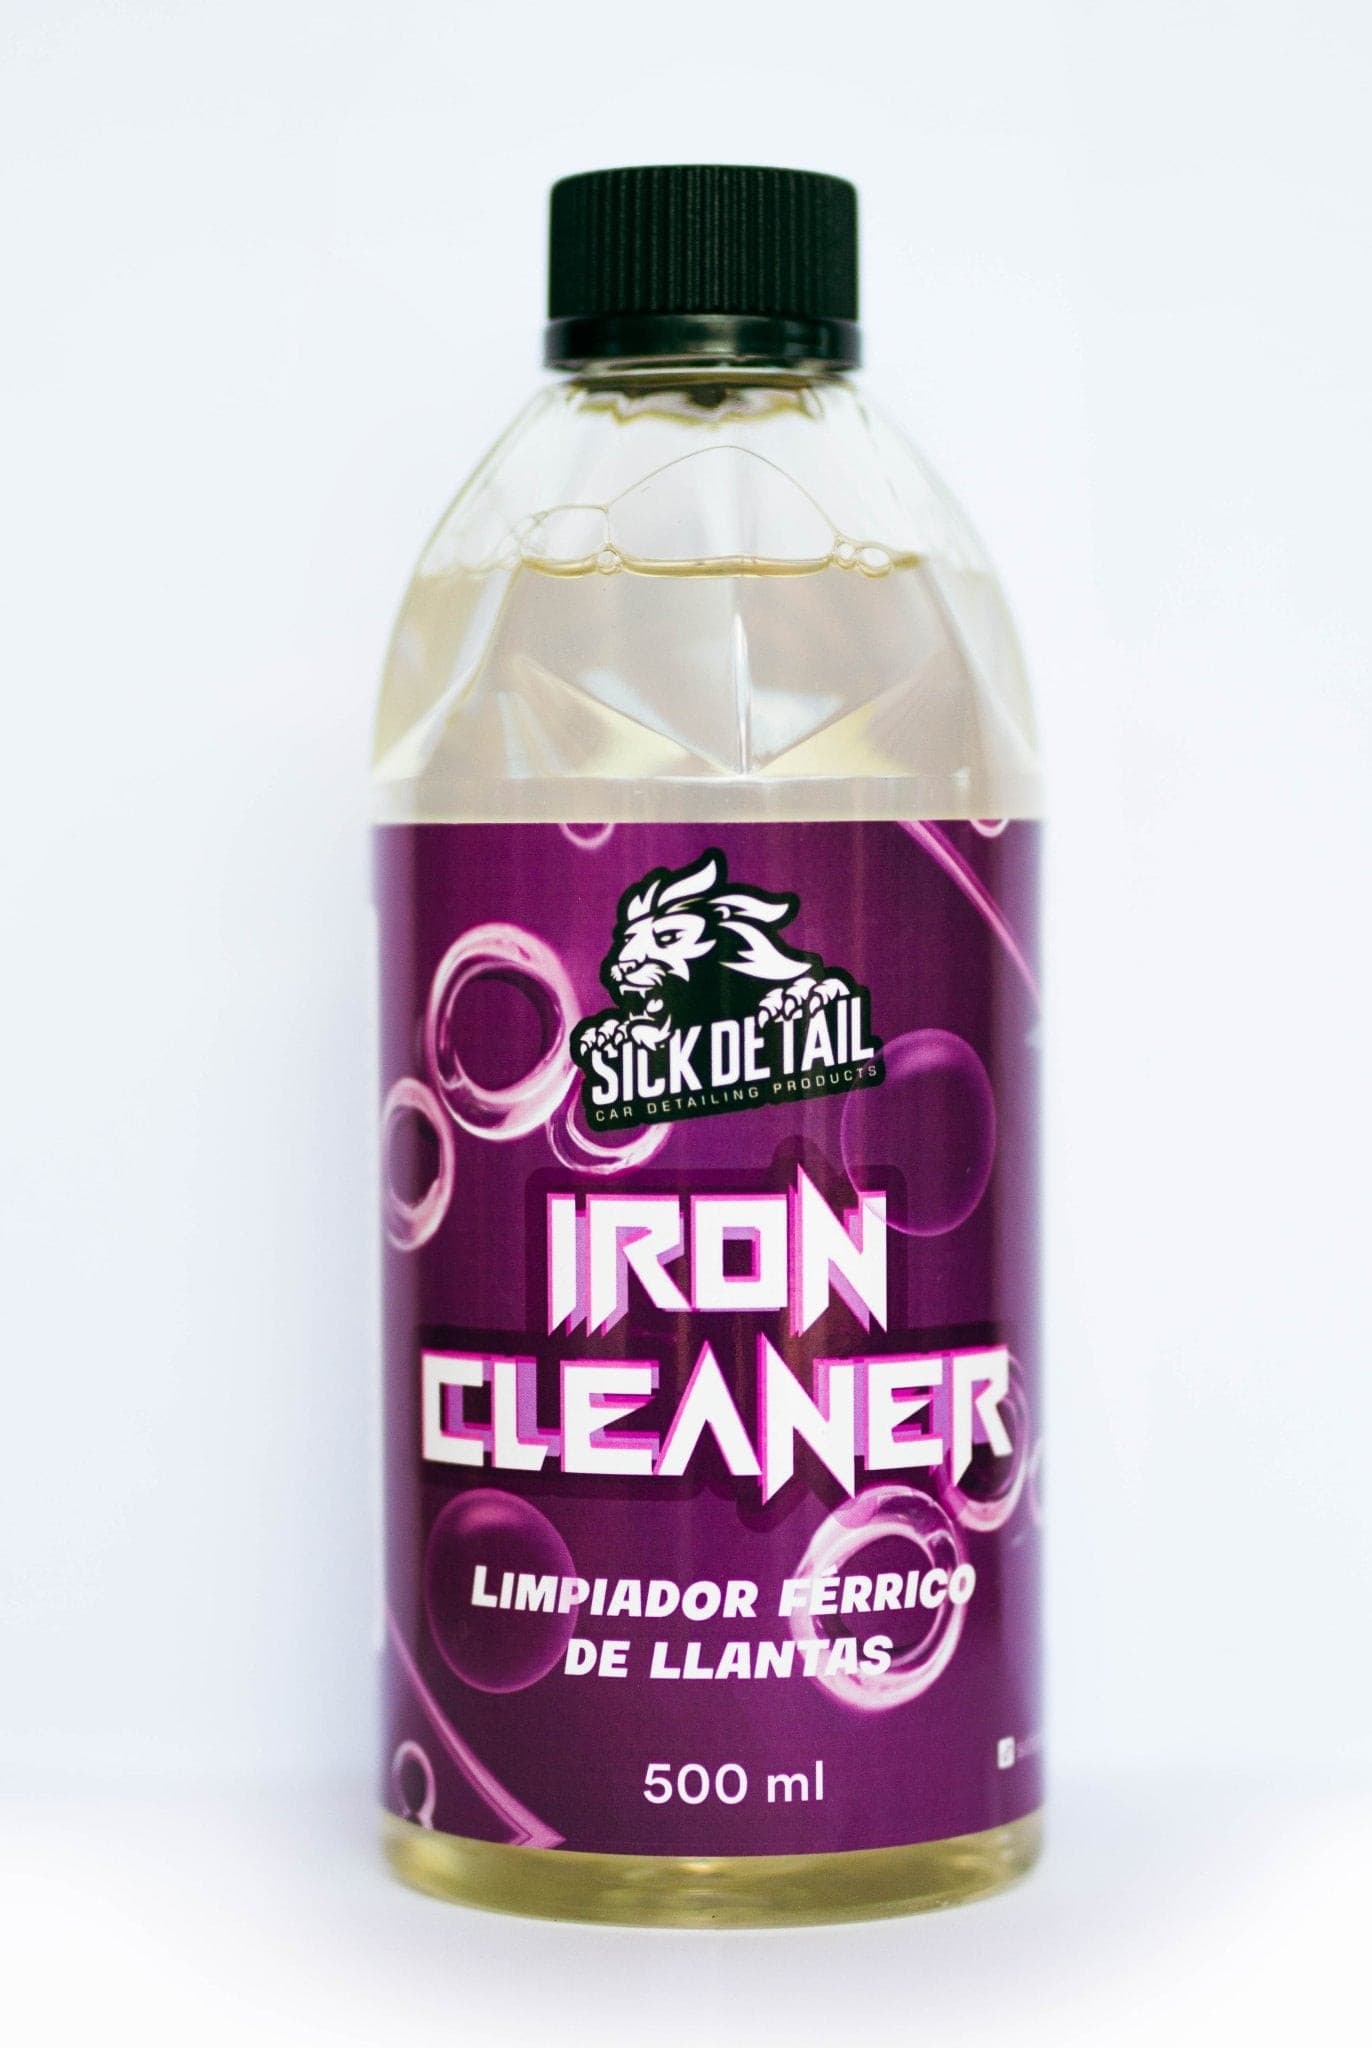 IRON CLEANER - Limpiador férrico de llantas